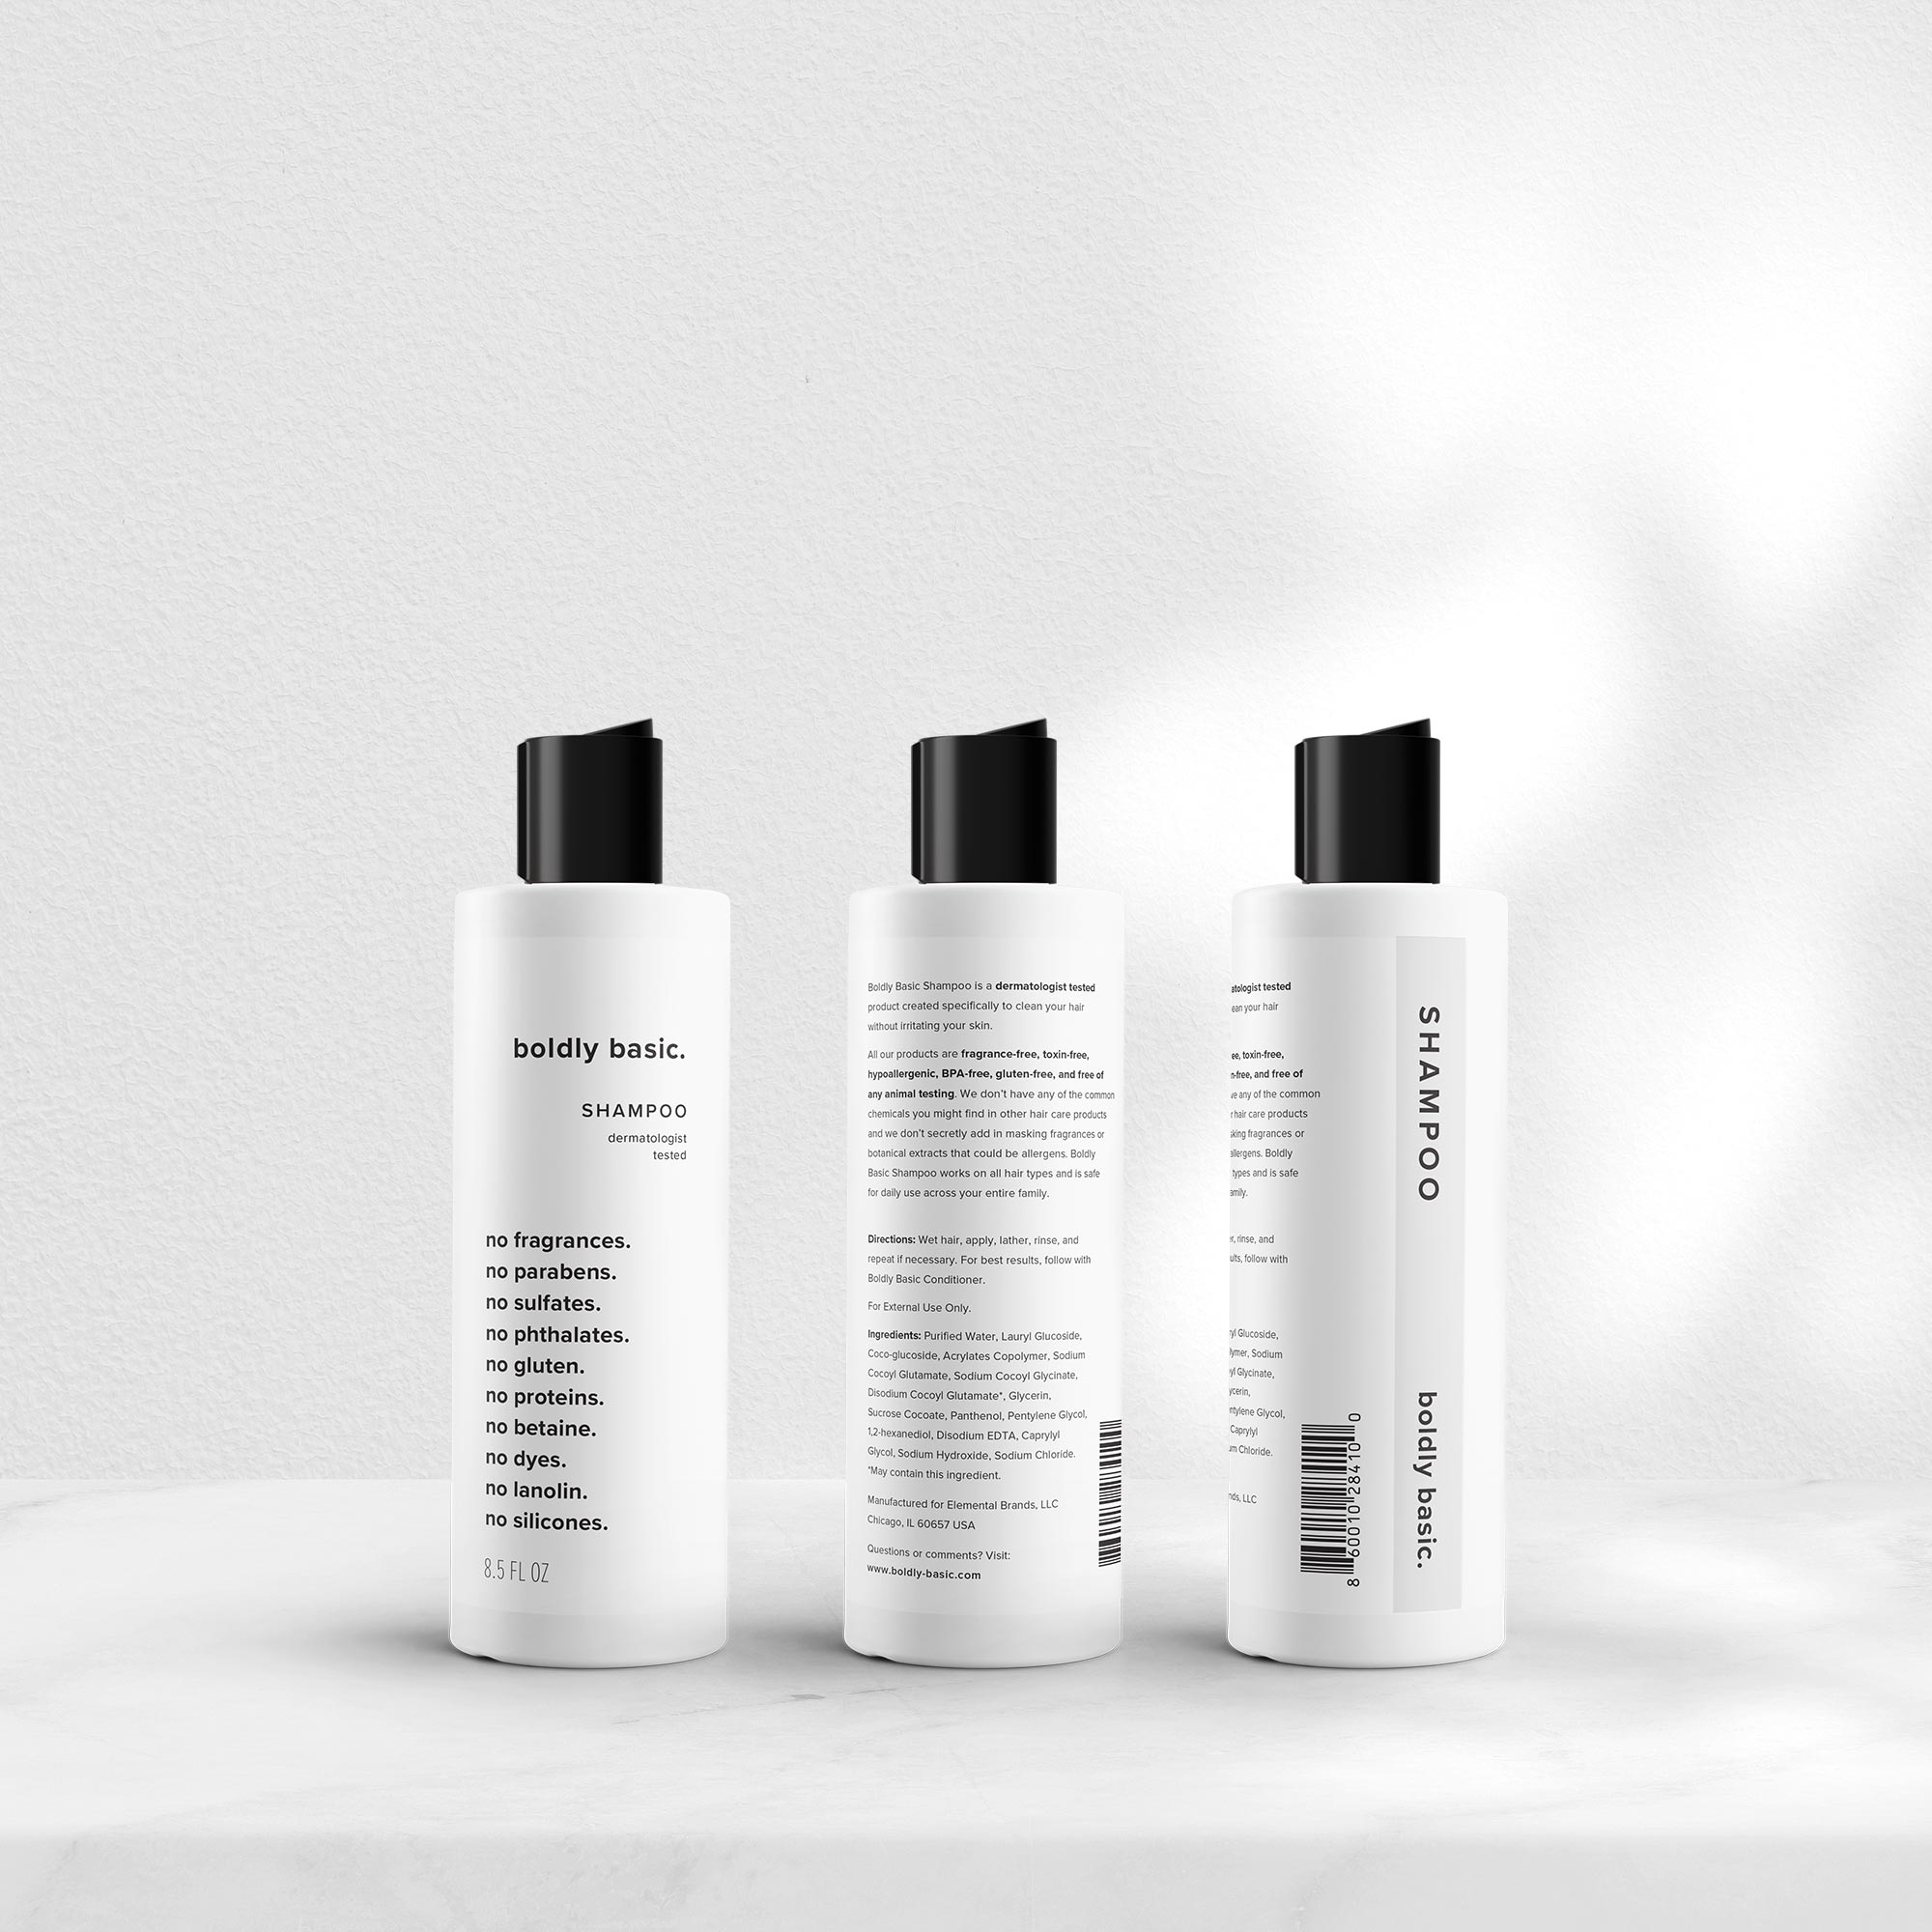 karolina krol studio boldly basic no parabens no toxins skincare haircare sustainable brand packaging design